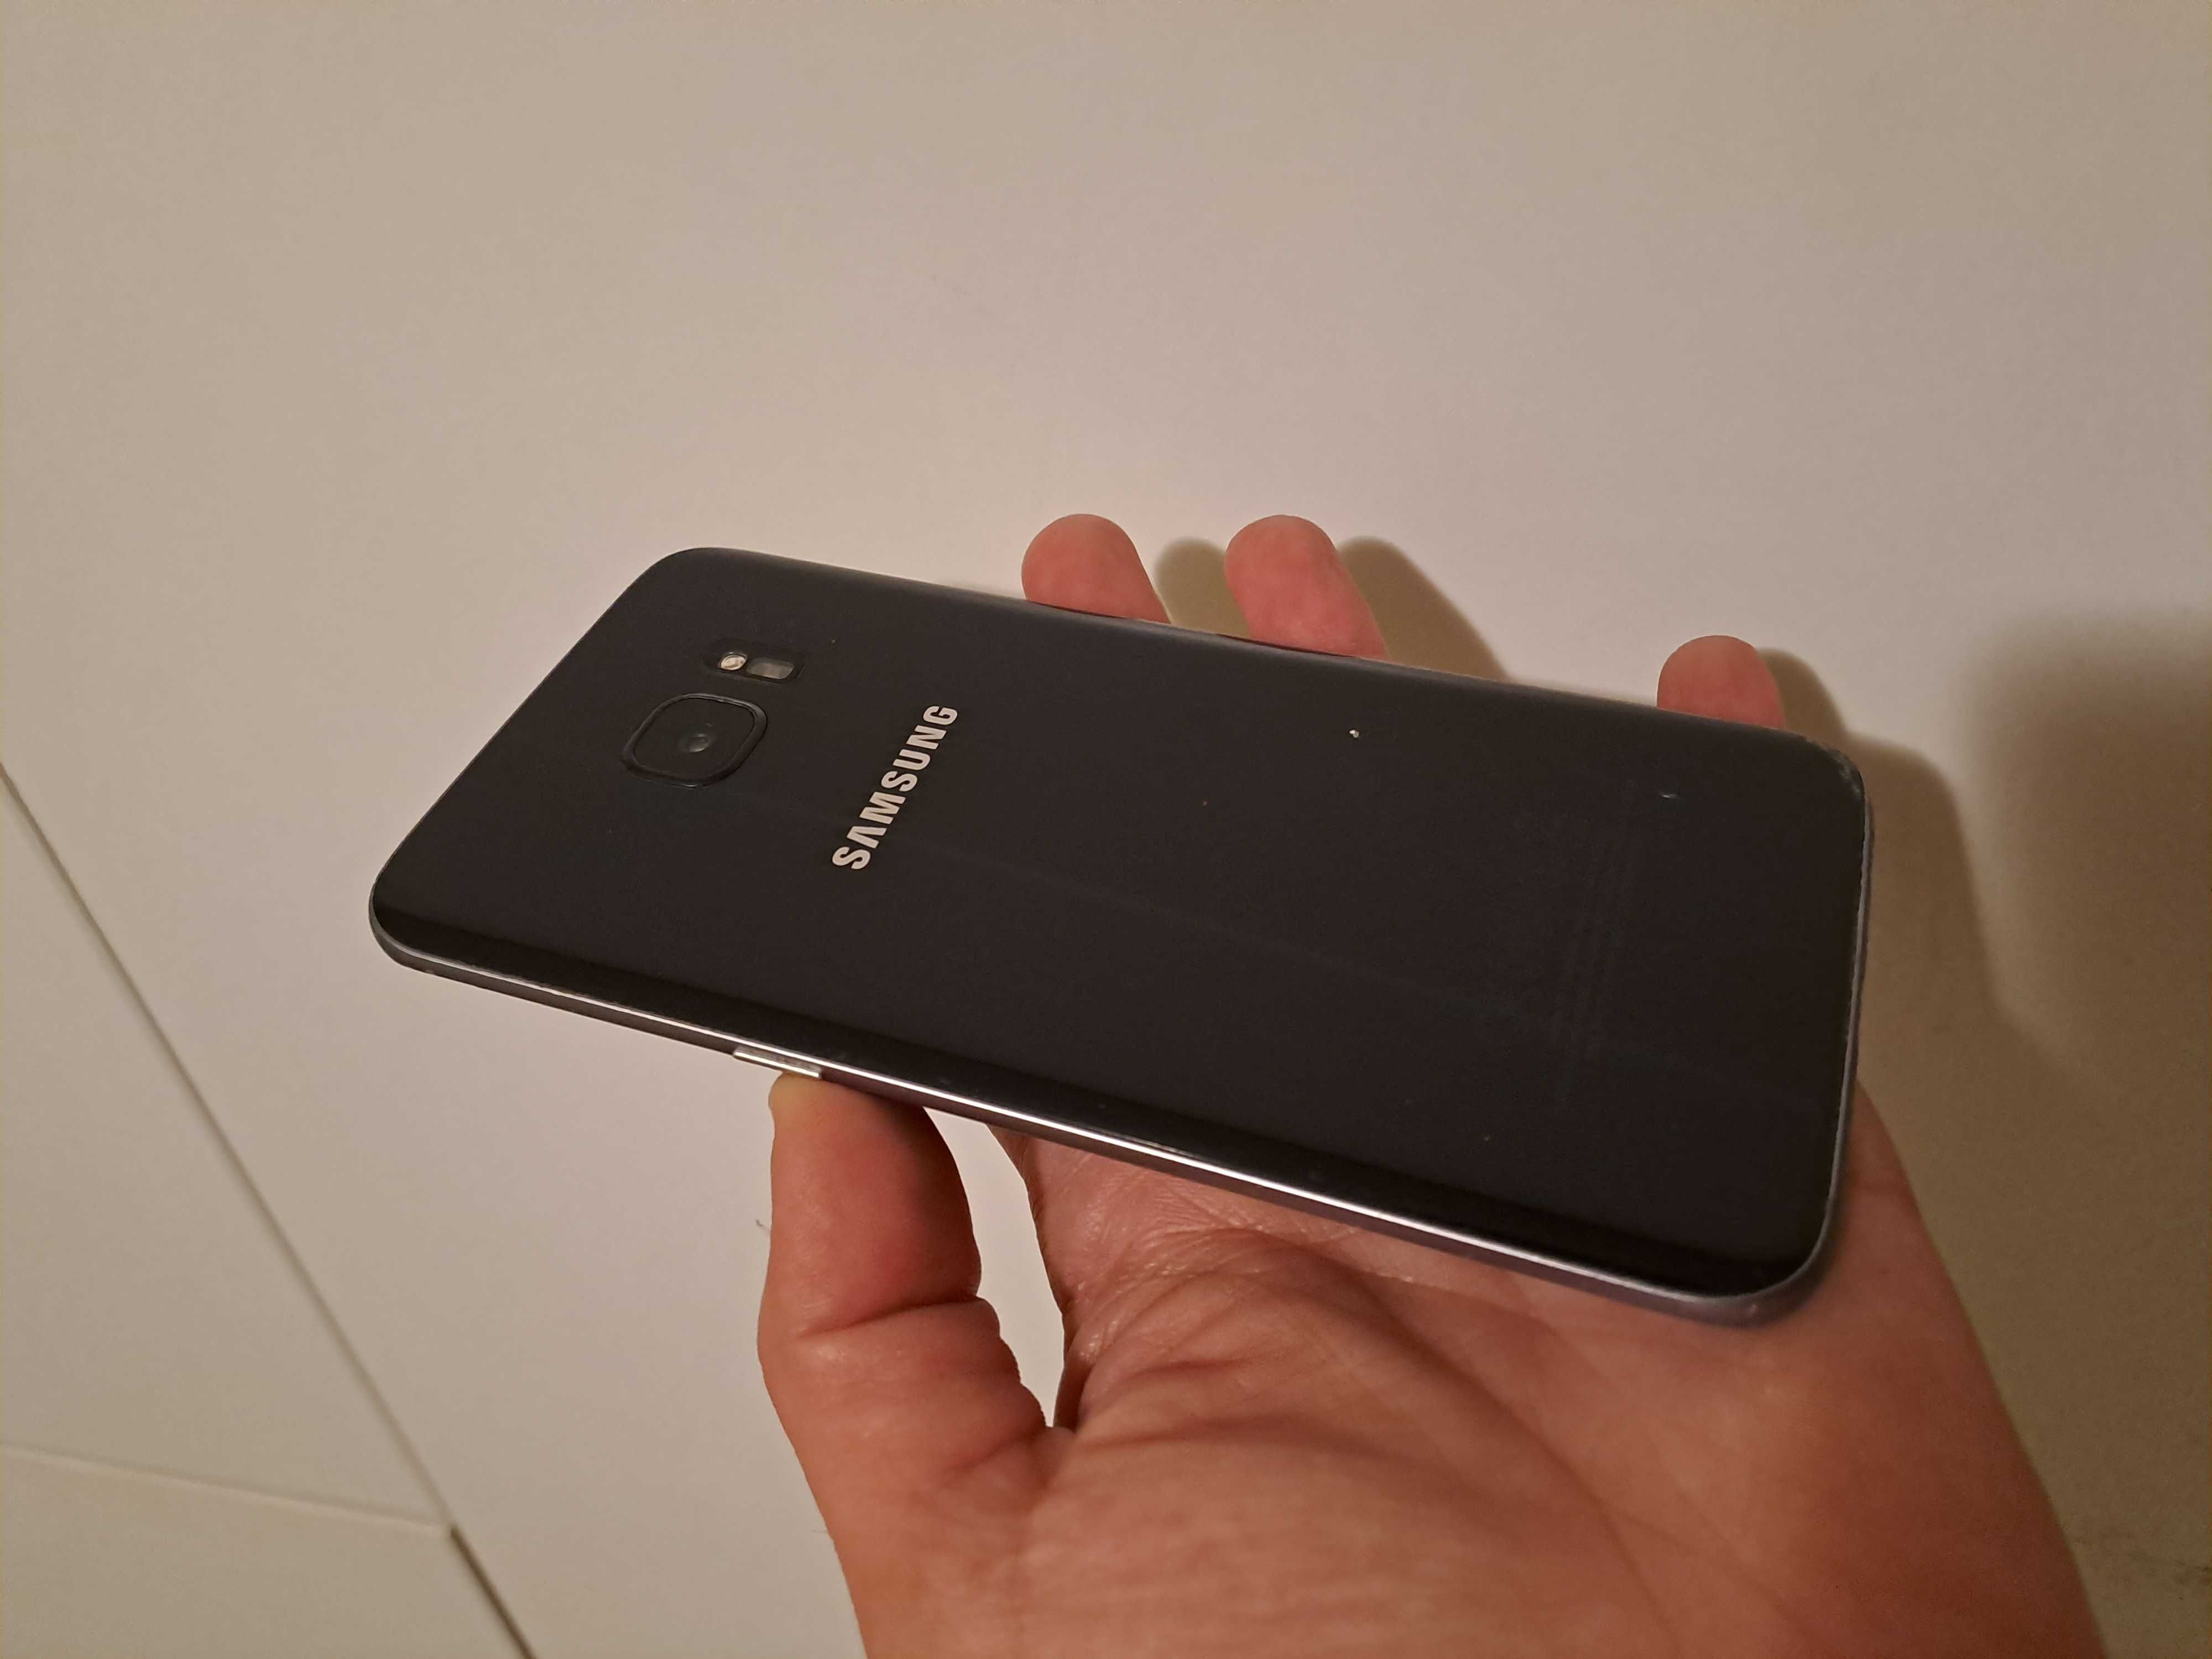 Samsung Galaxy S7 edge baterie buna - NEGOCIABIL